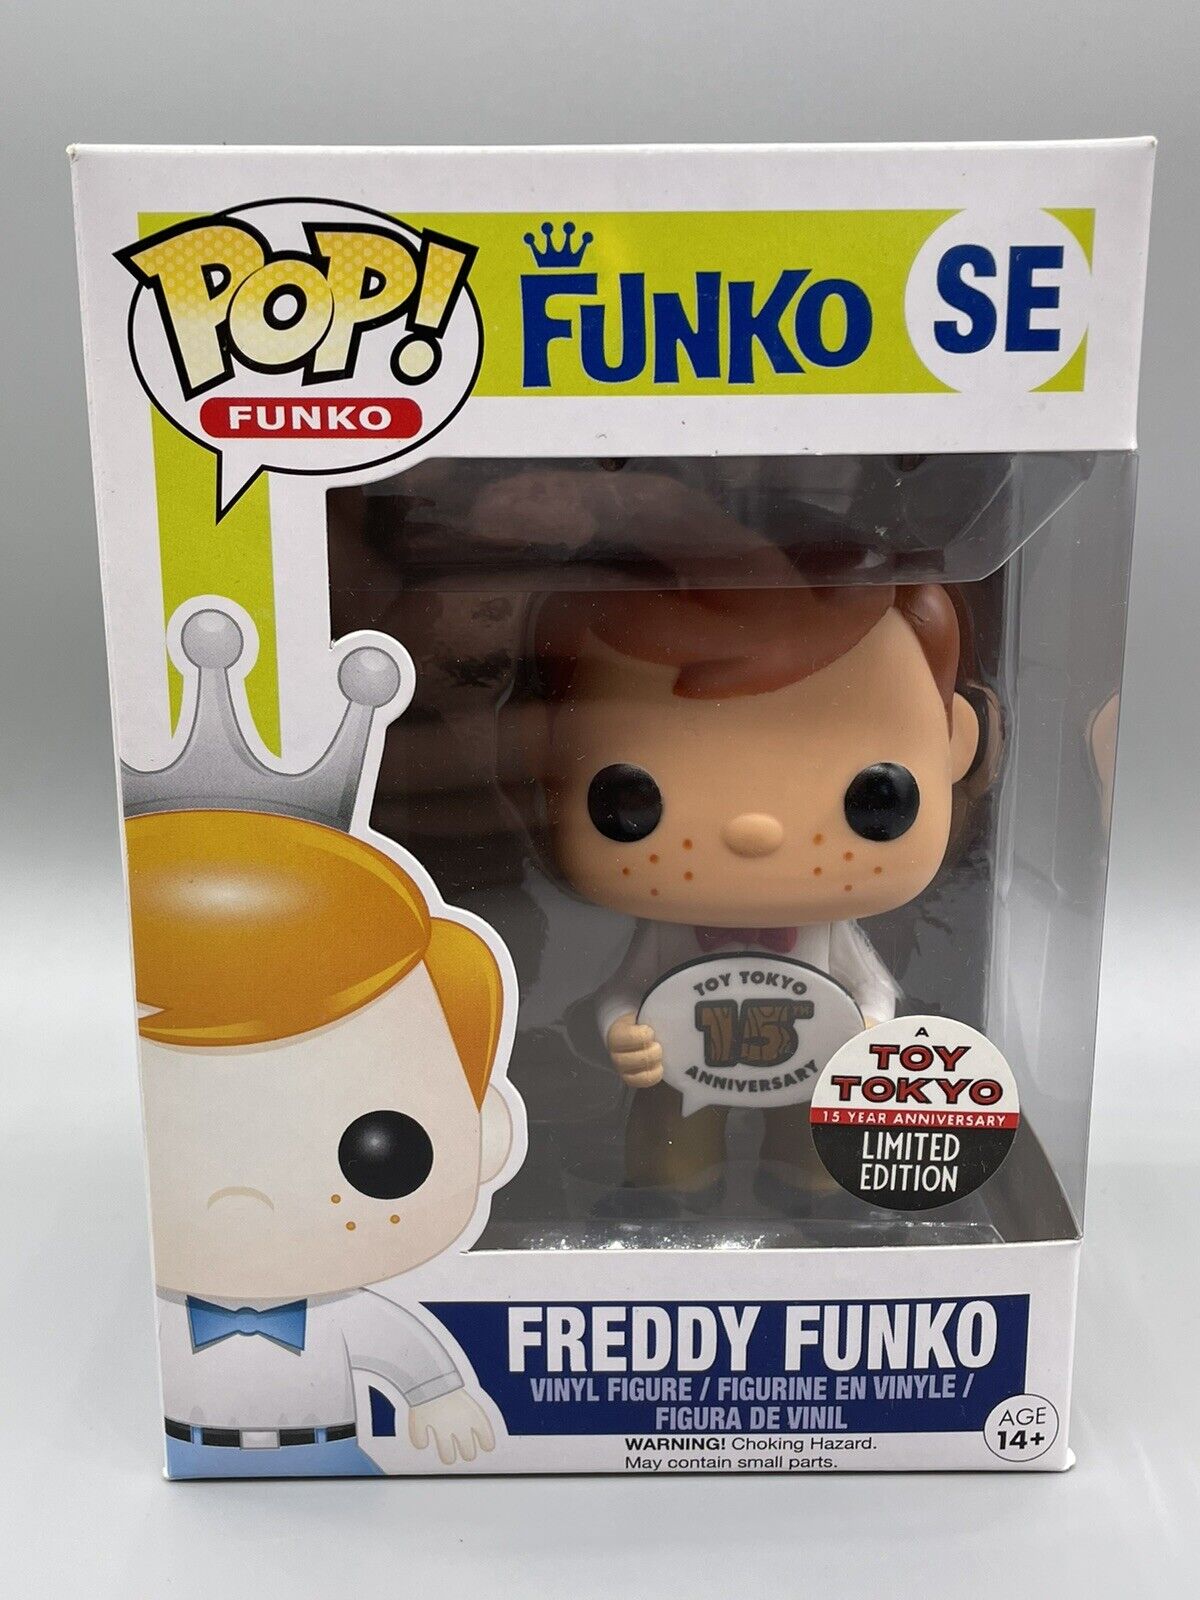 NYCC 2015 Funko Pop Freddy Funko SE 15th Year Toy Tokyo Exclusive - Good Box New